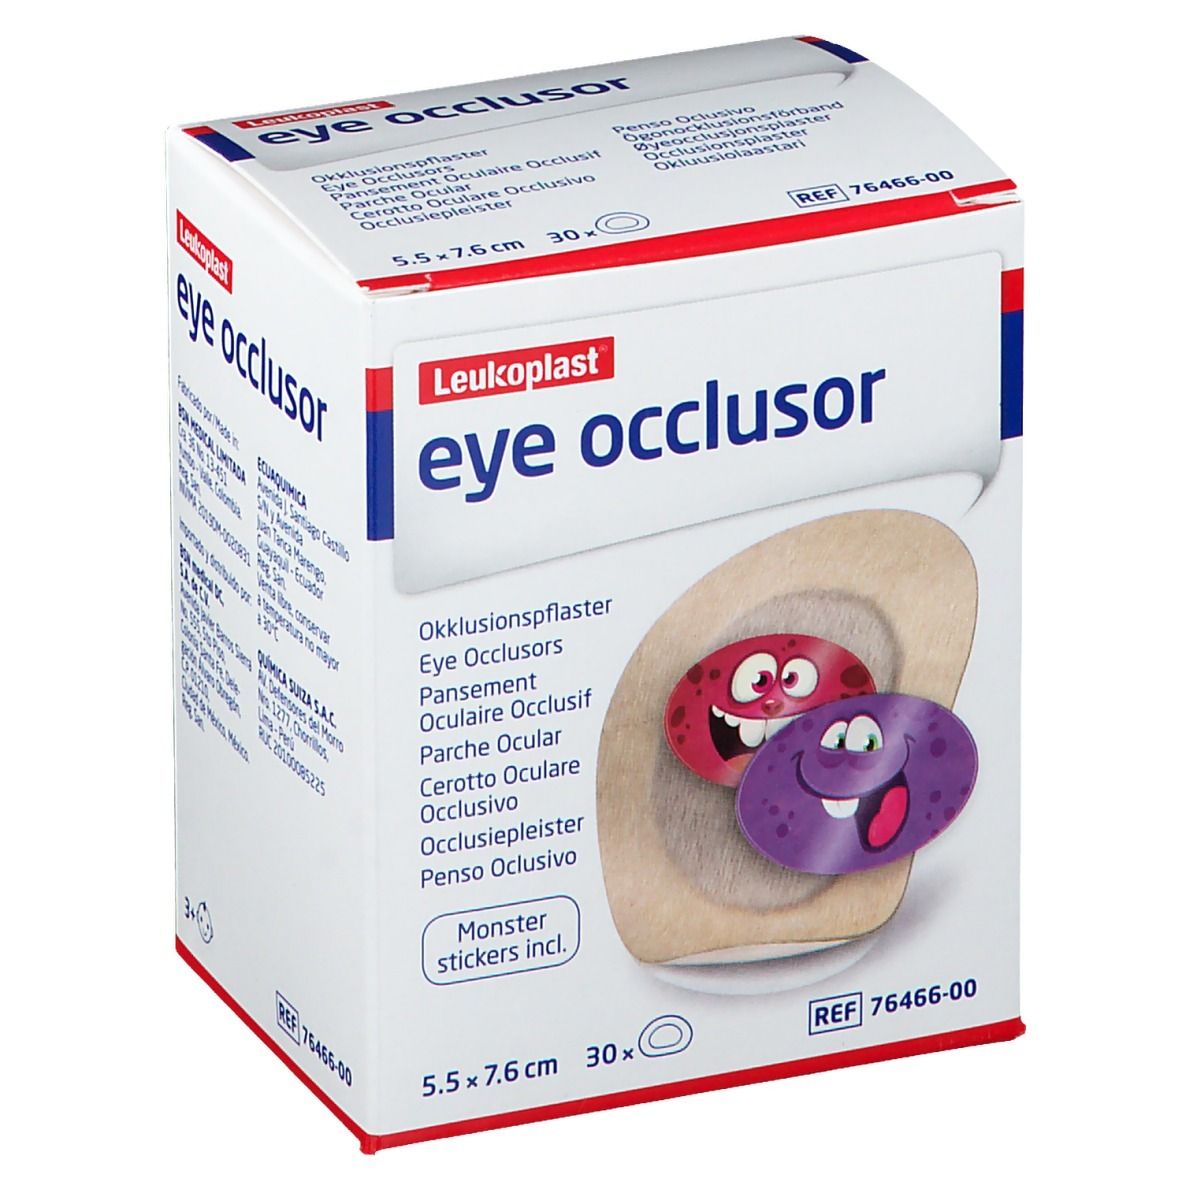 Leukoplast Eye Occlusor